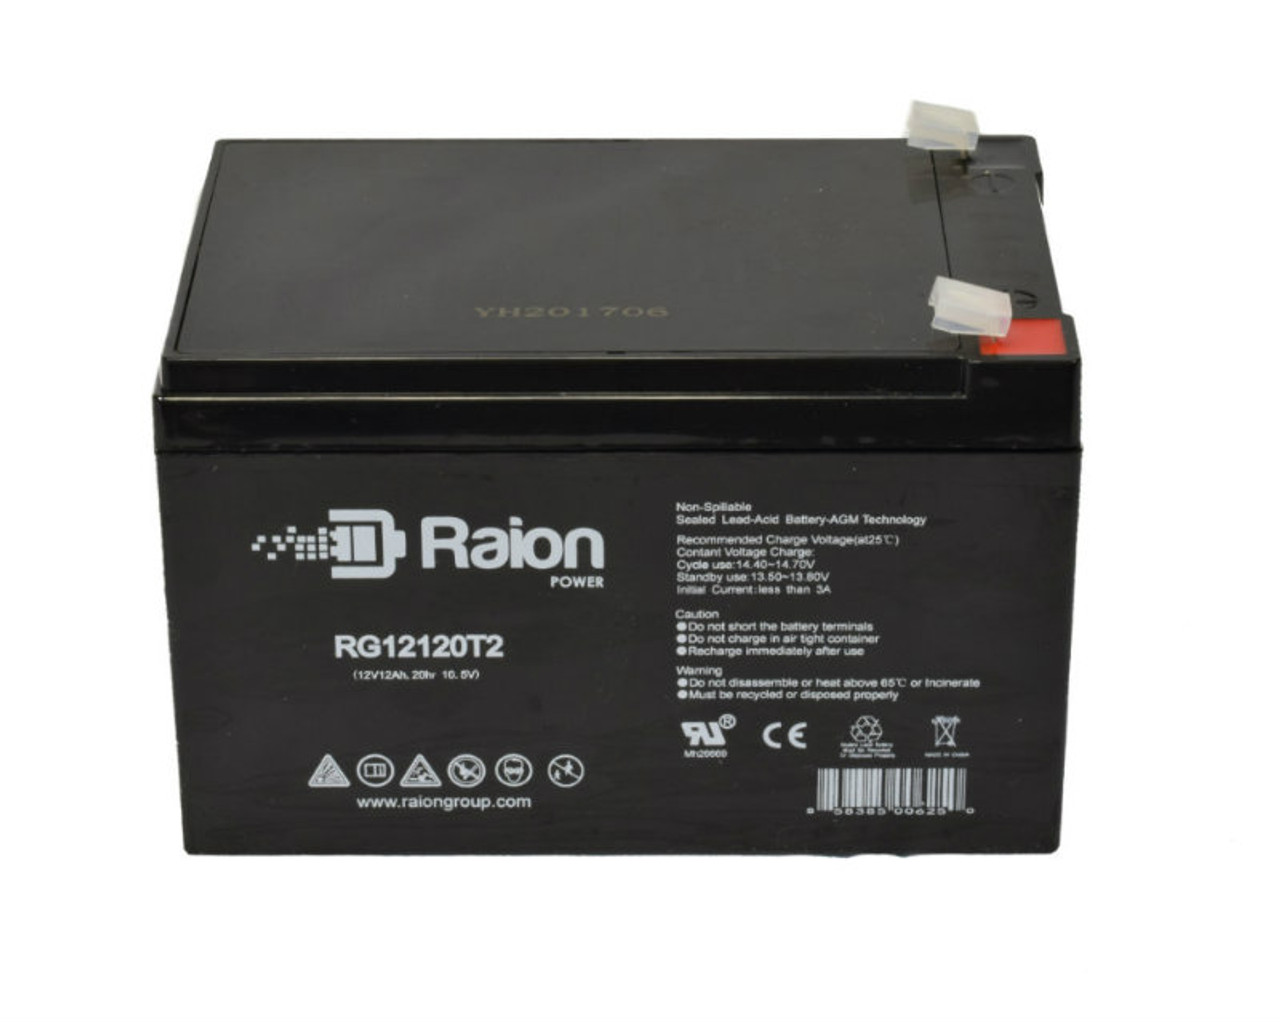 Raion Power RG12120T2 SLA Battery for Yuntong YT-12120D